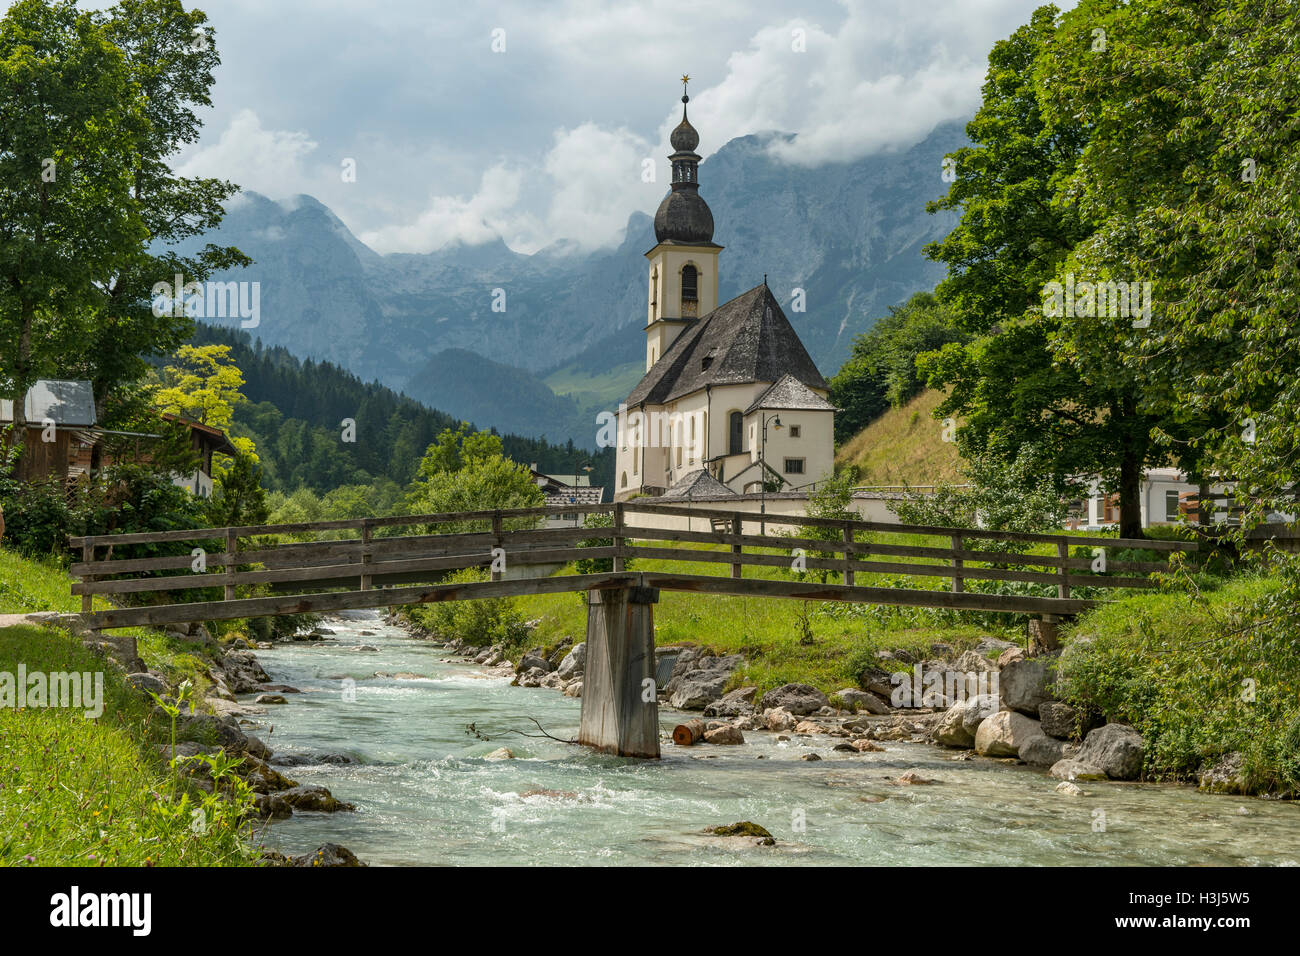 St Sebastians Kirche and River Tal, Ramsau, near Berchtesgaden, Germany Stock Photo